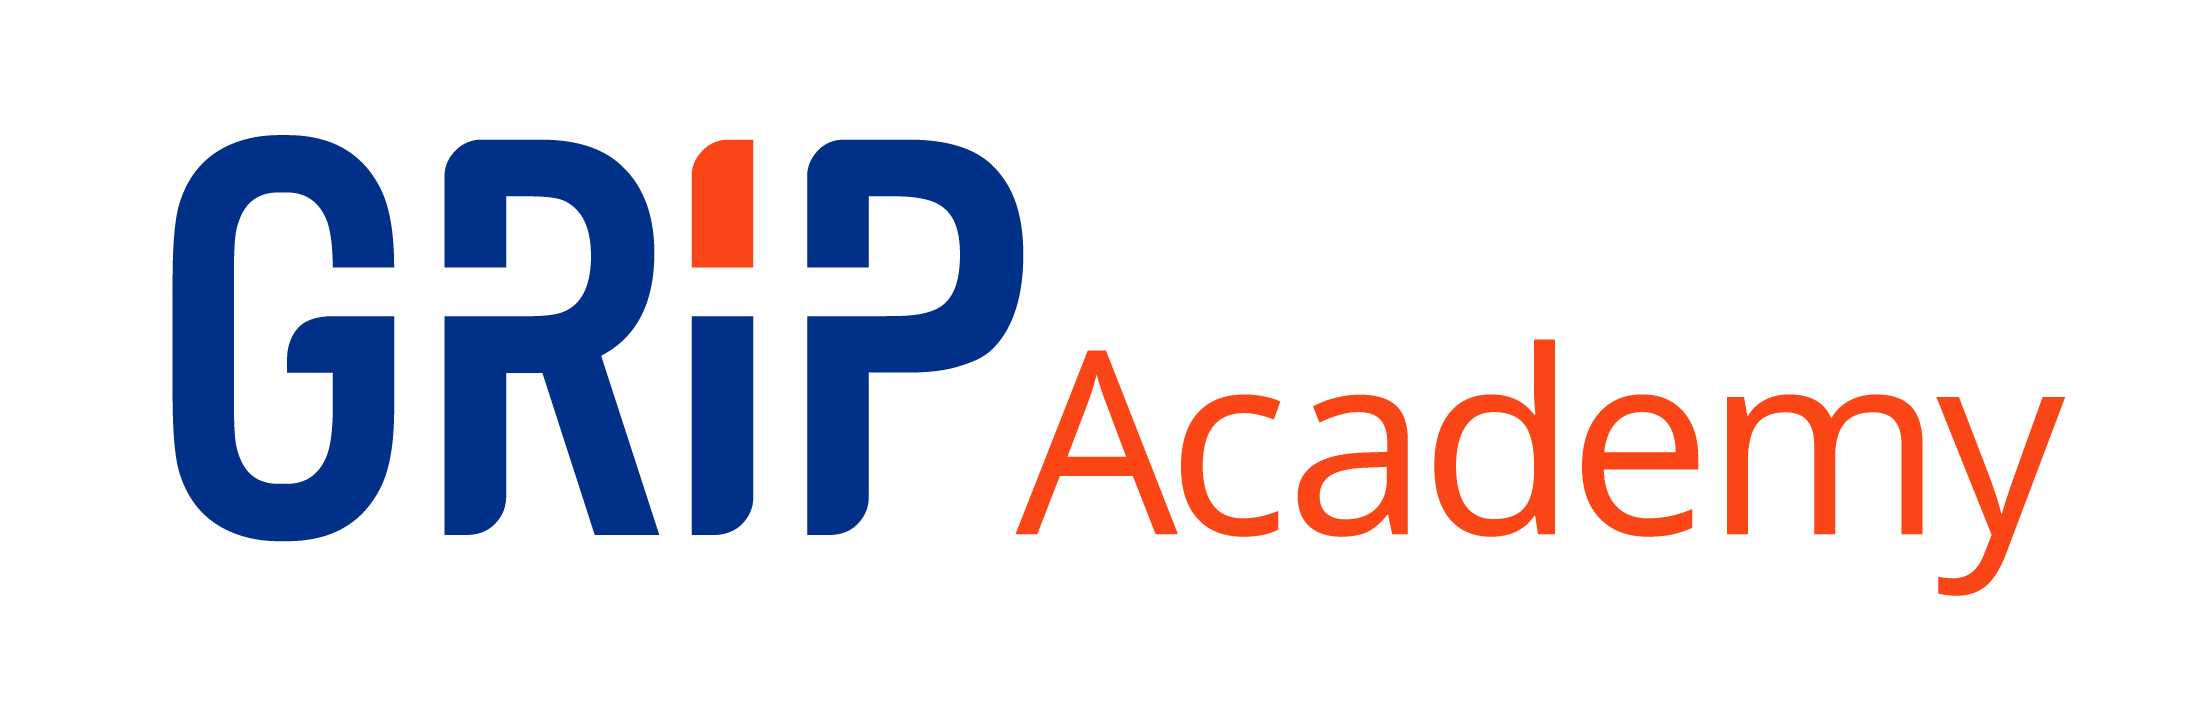 GRIP Academy logo